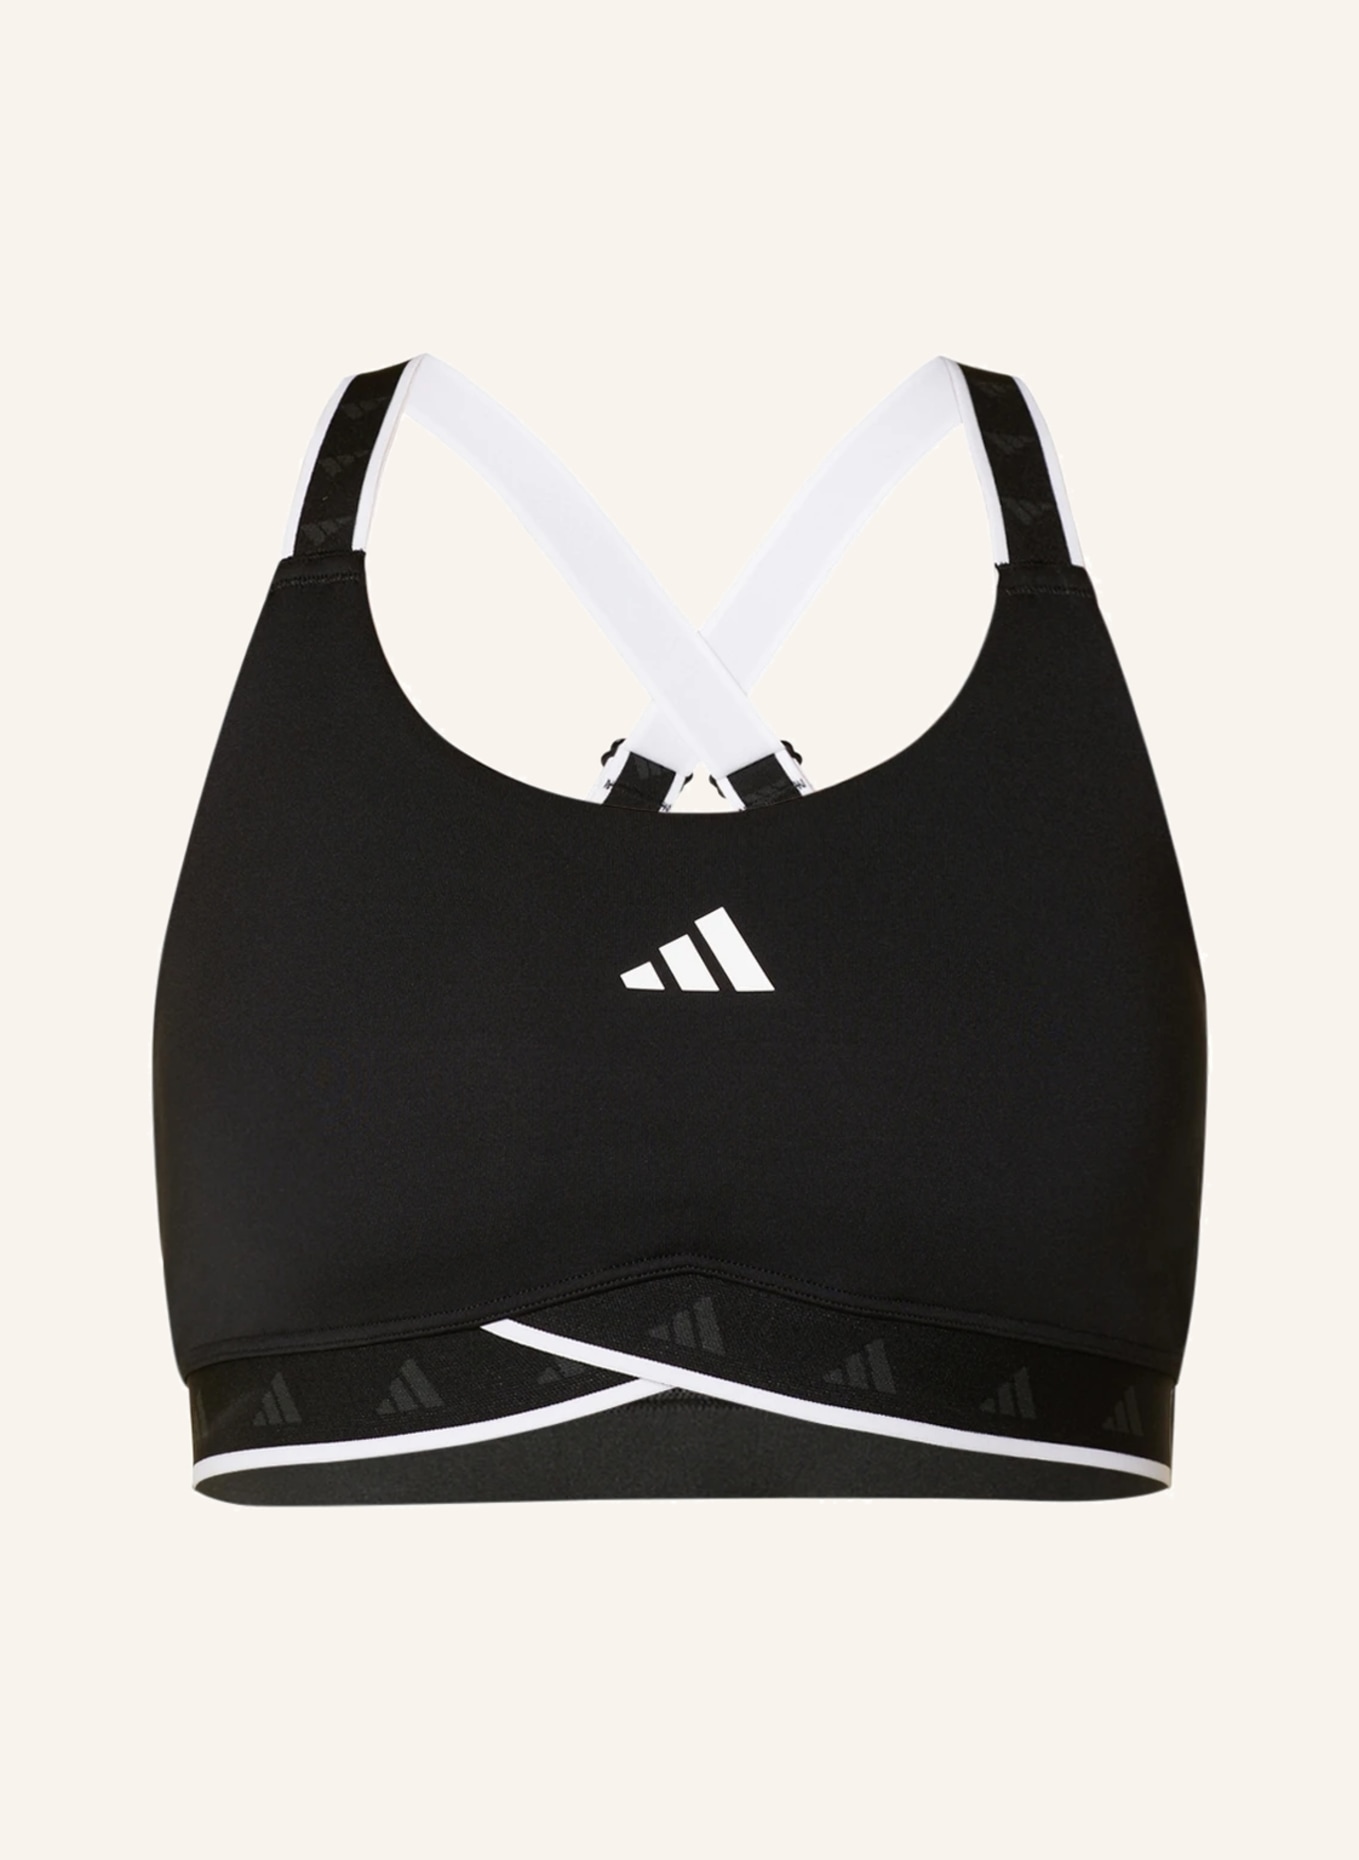 adidas Sports bra in black/ white